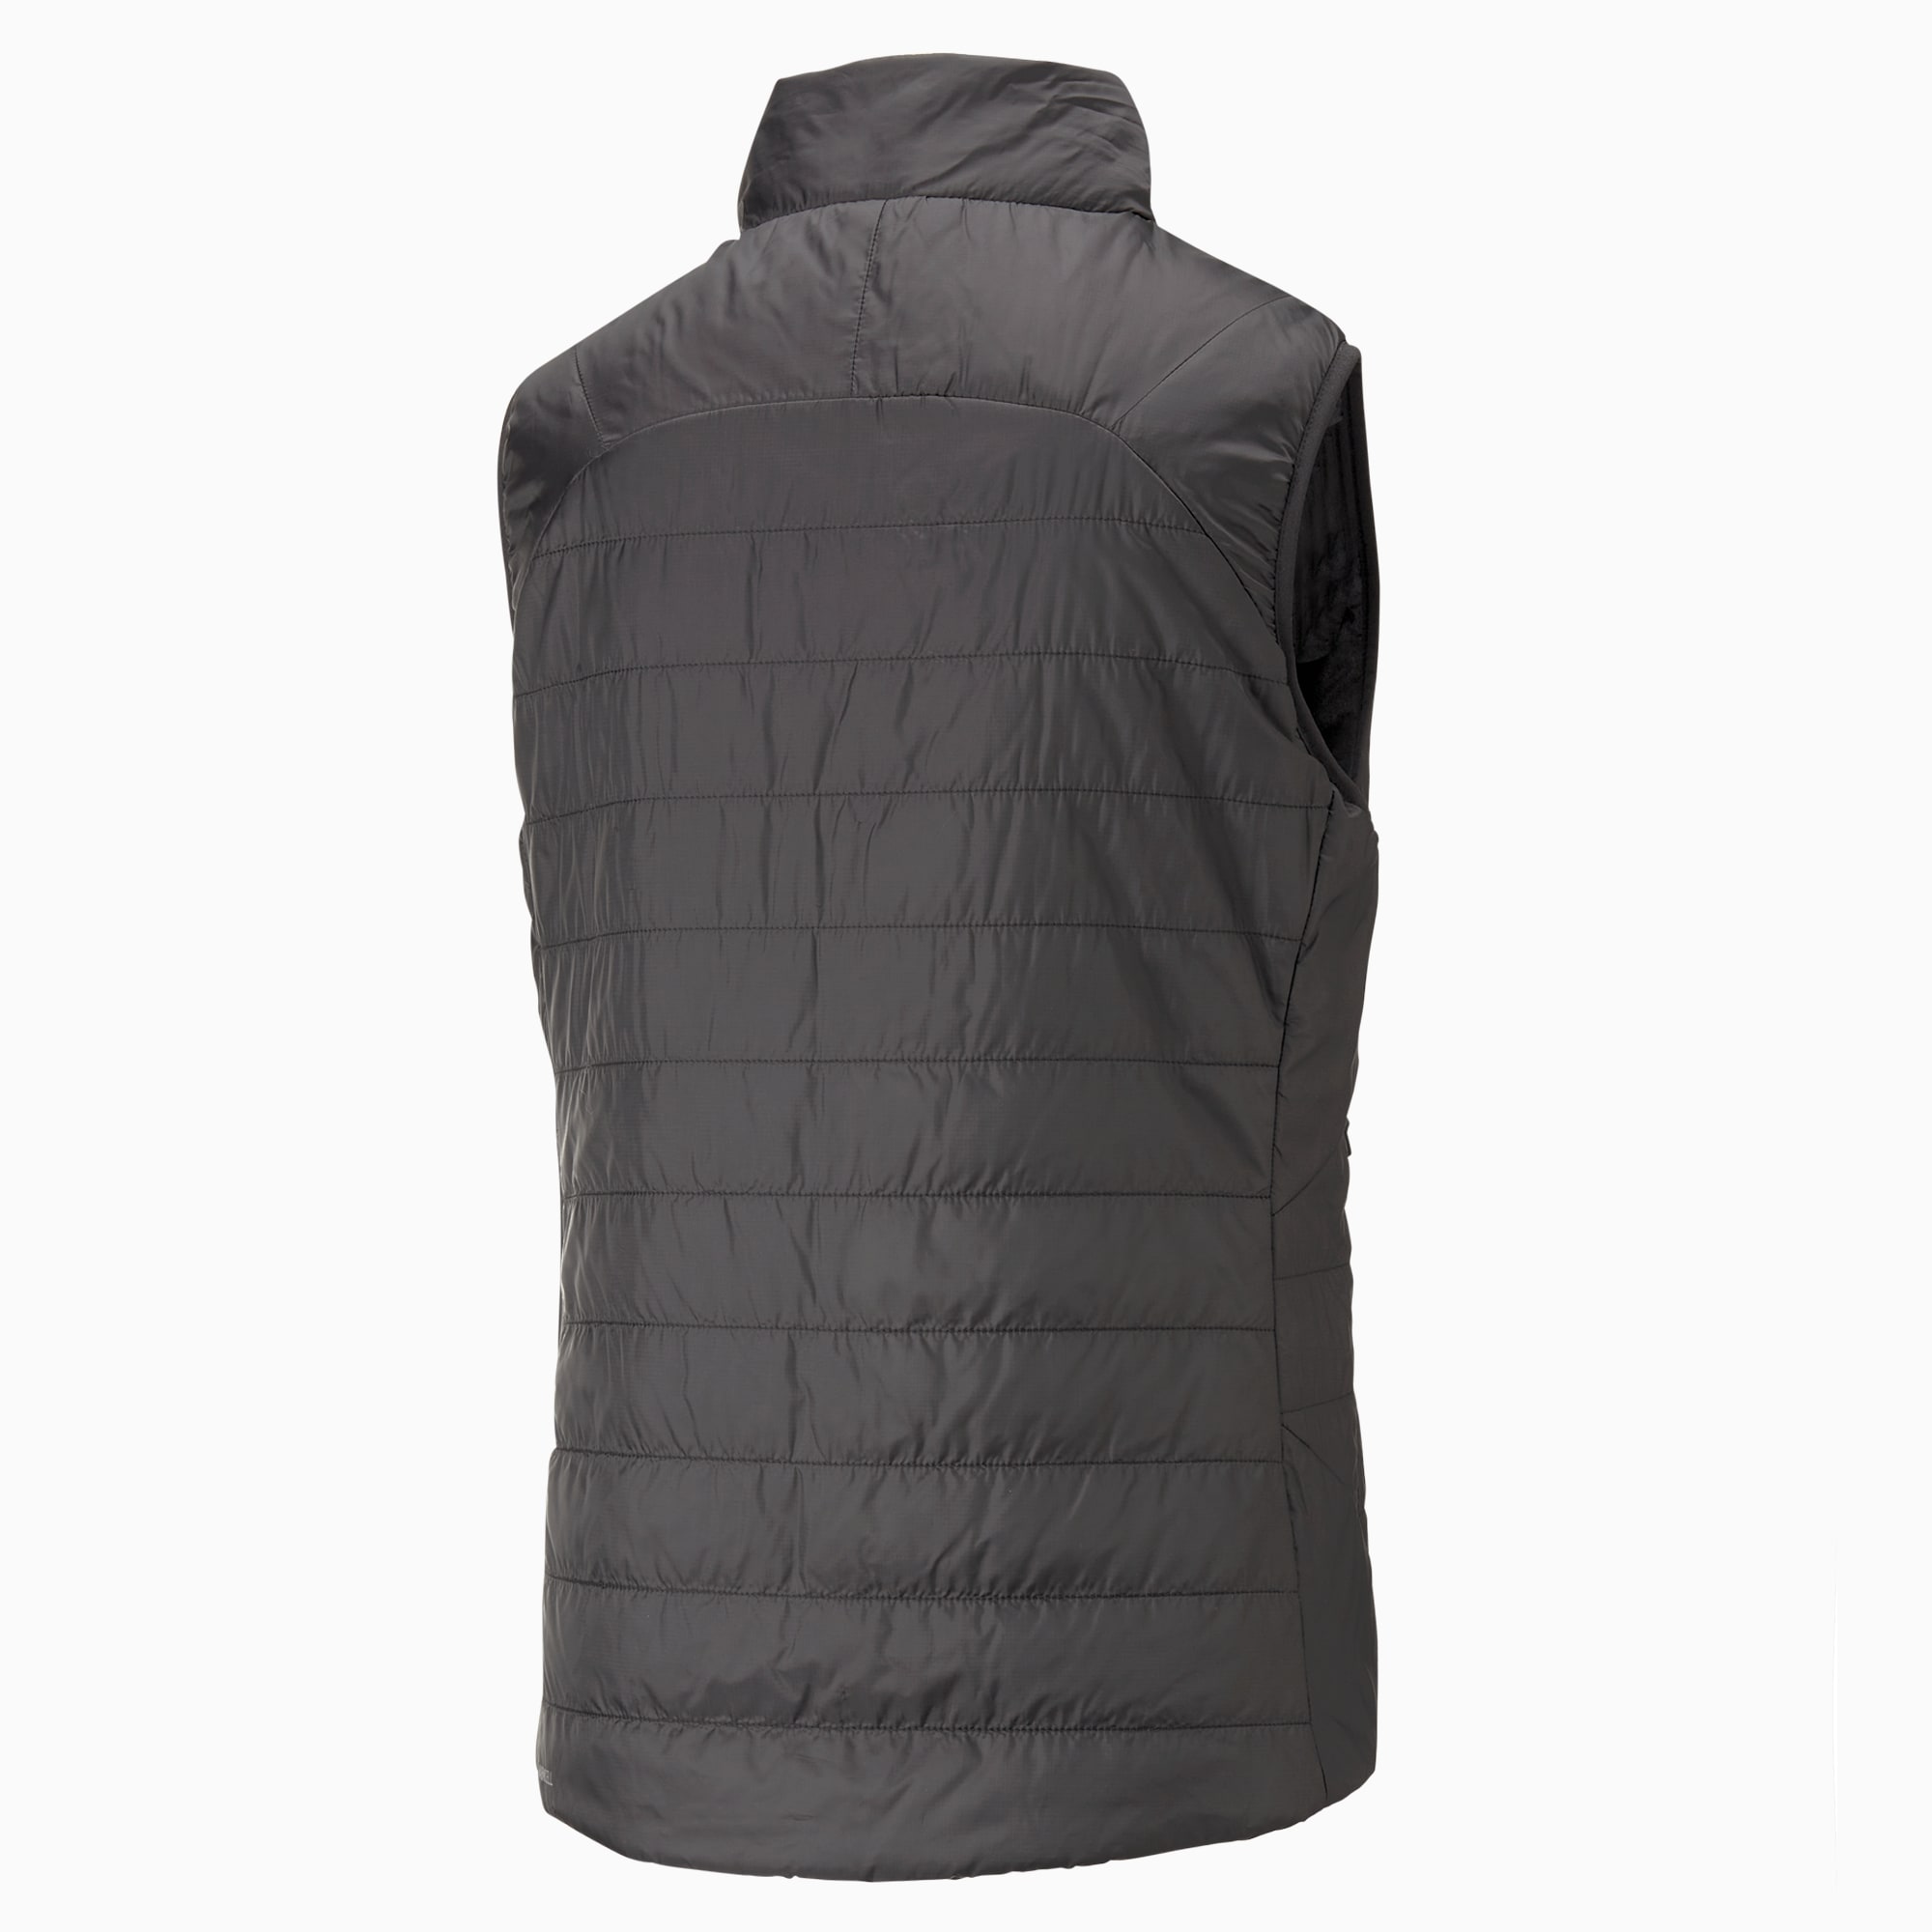 PUMA Seasons Reversible Primaloft Hiking Vest Women Women's Jacket, Black, Size S, Clothing